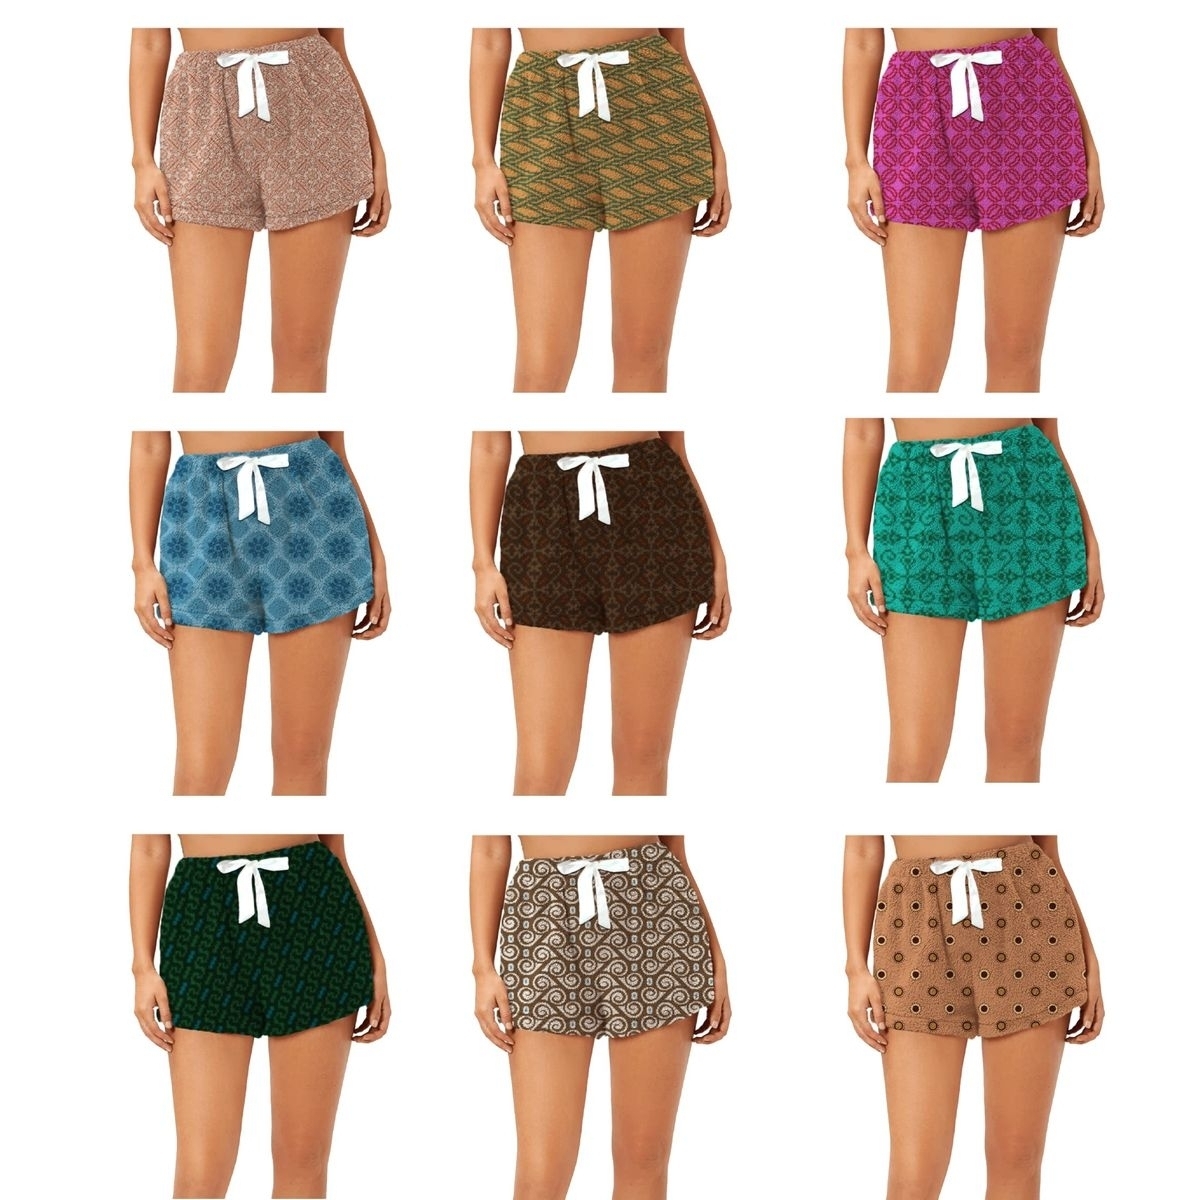 4-Pack: Women's Ultra Plush Micro-Fleece Soft Printed Pajama Shorts - Large, Animal